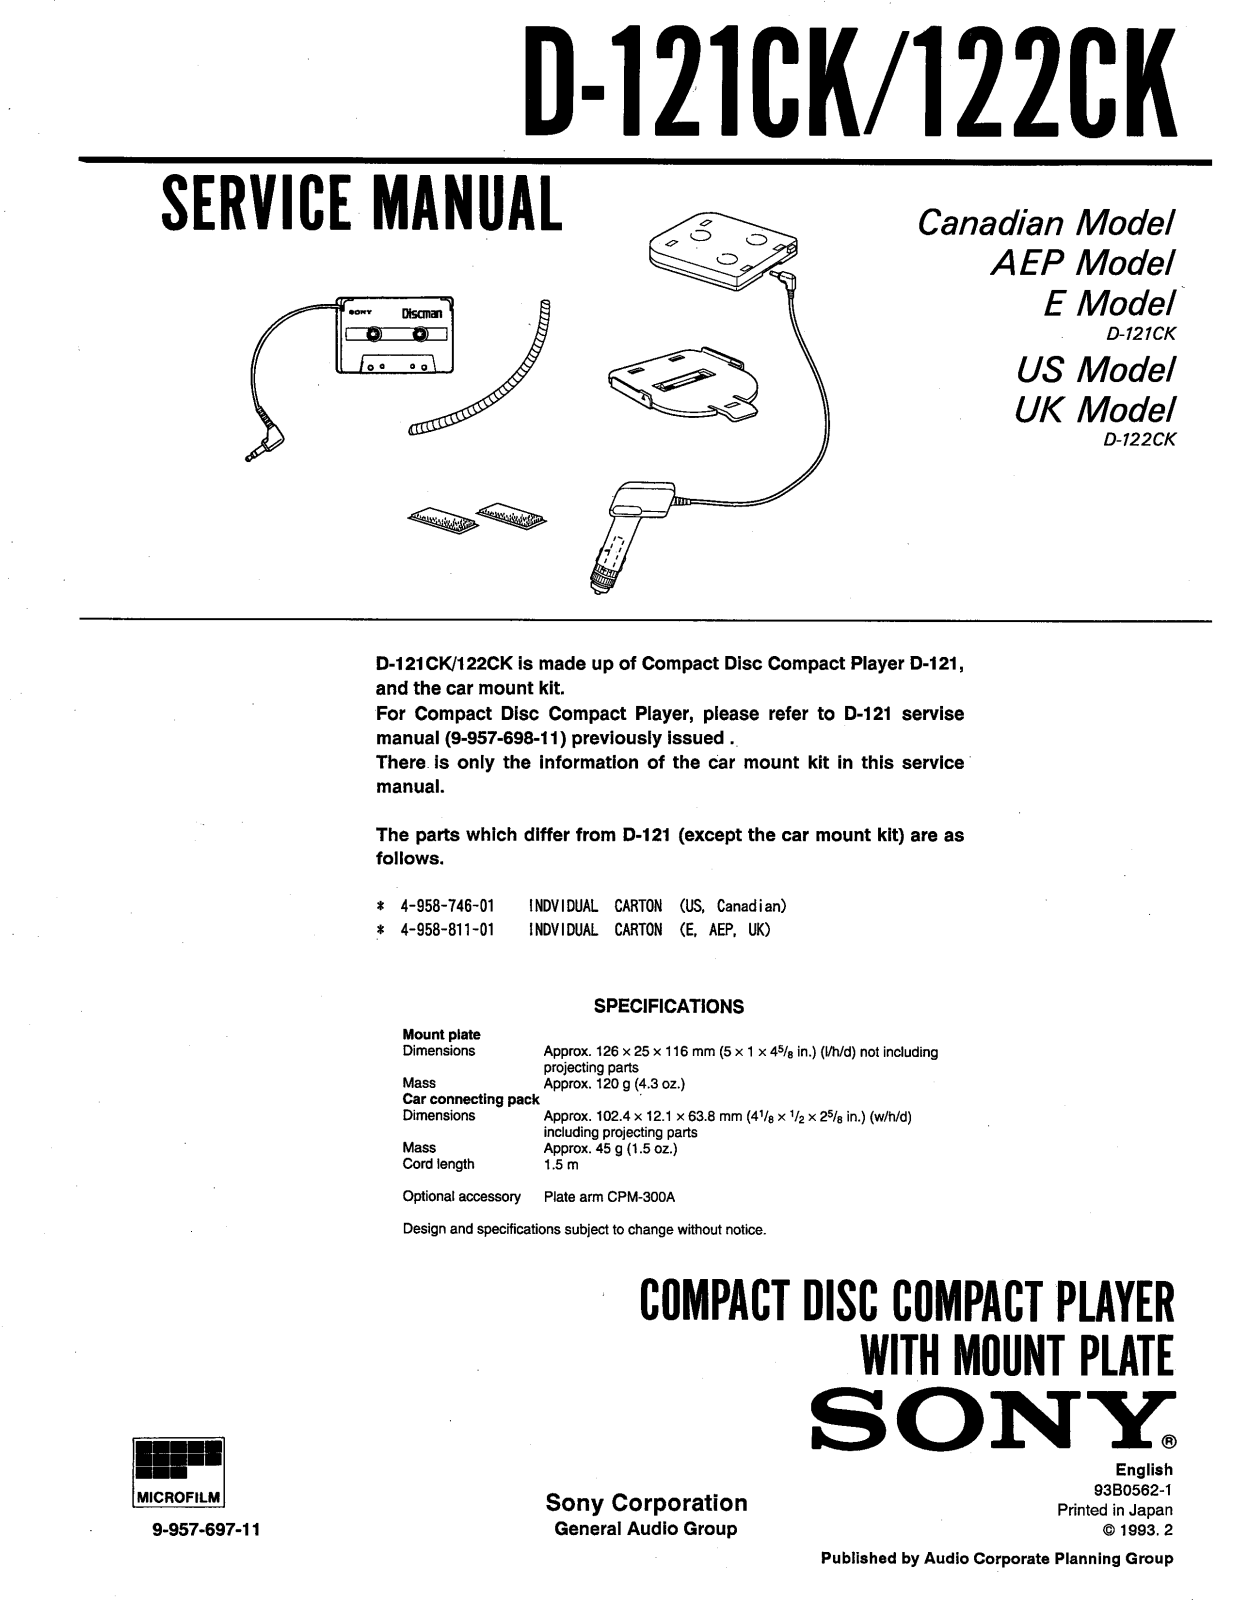 Sony D-121CK, D-122CK Service Manual